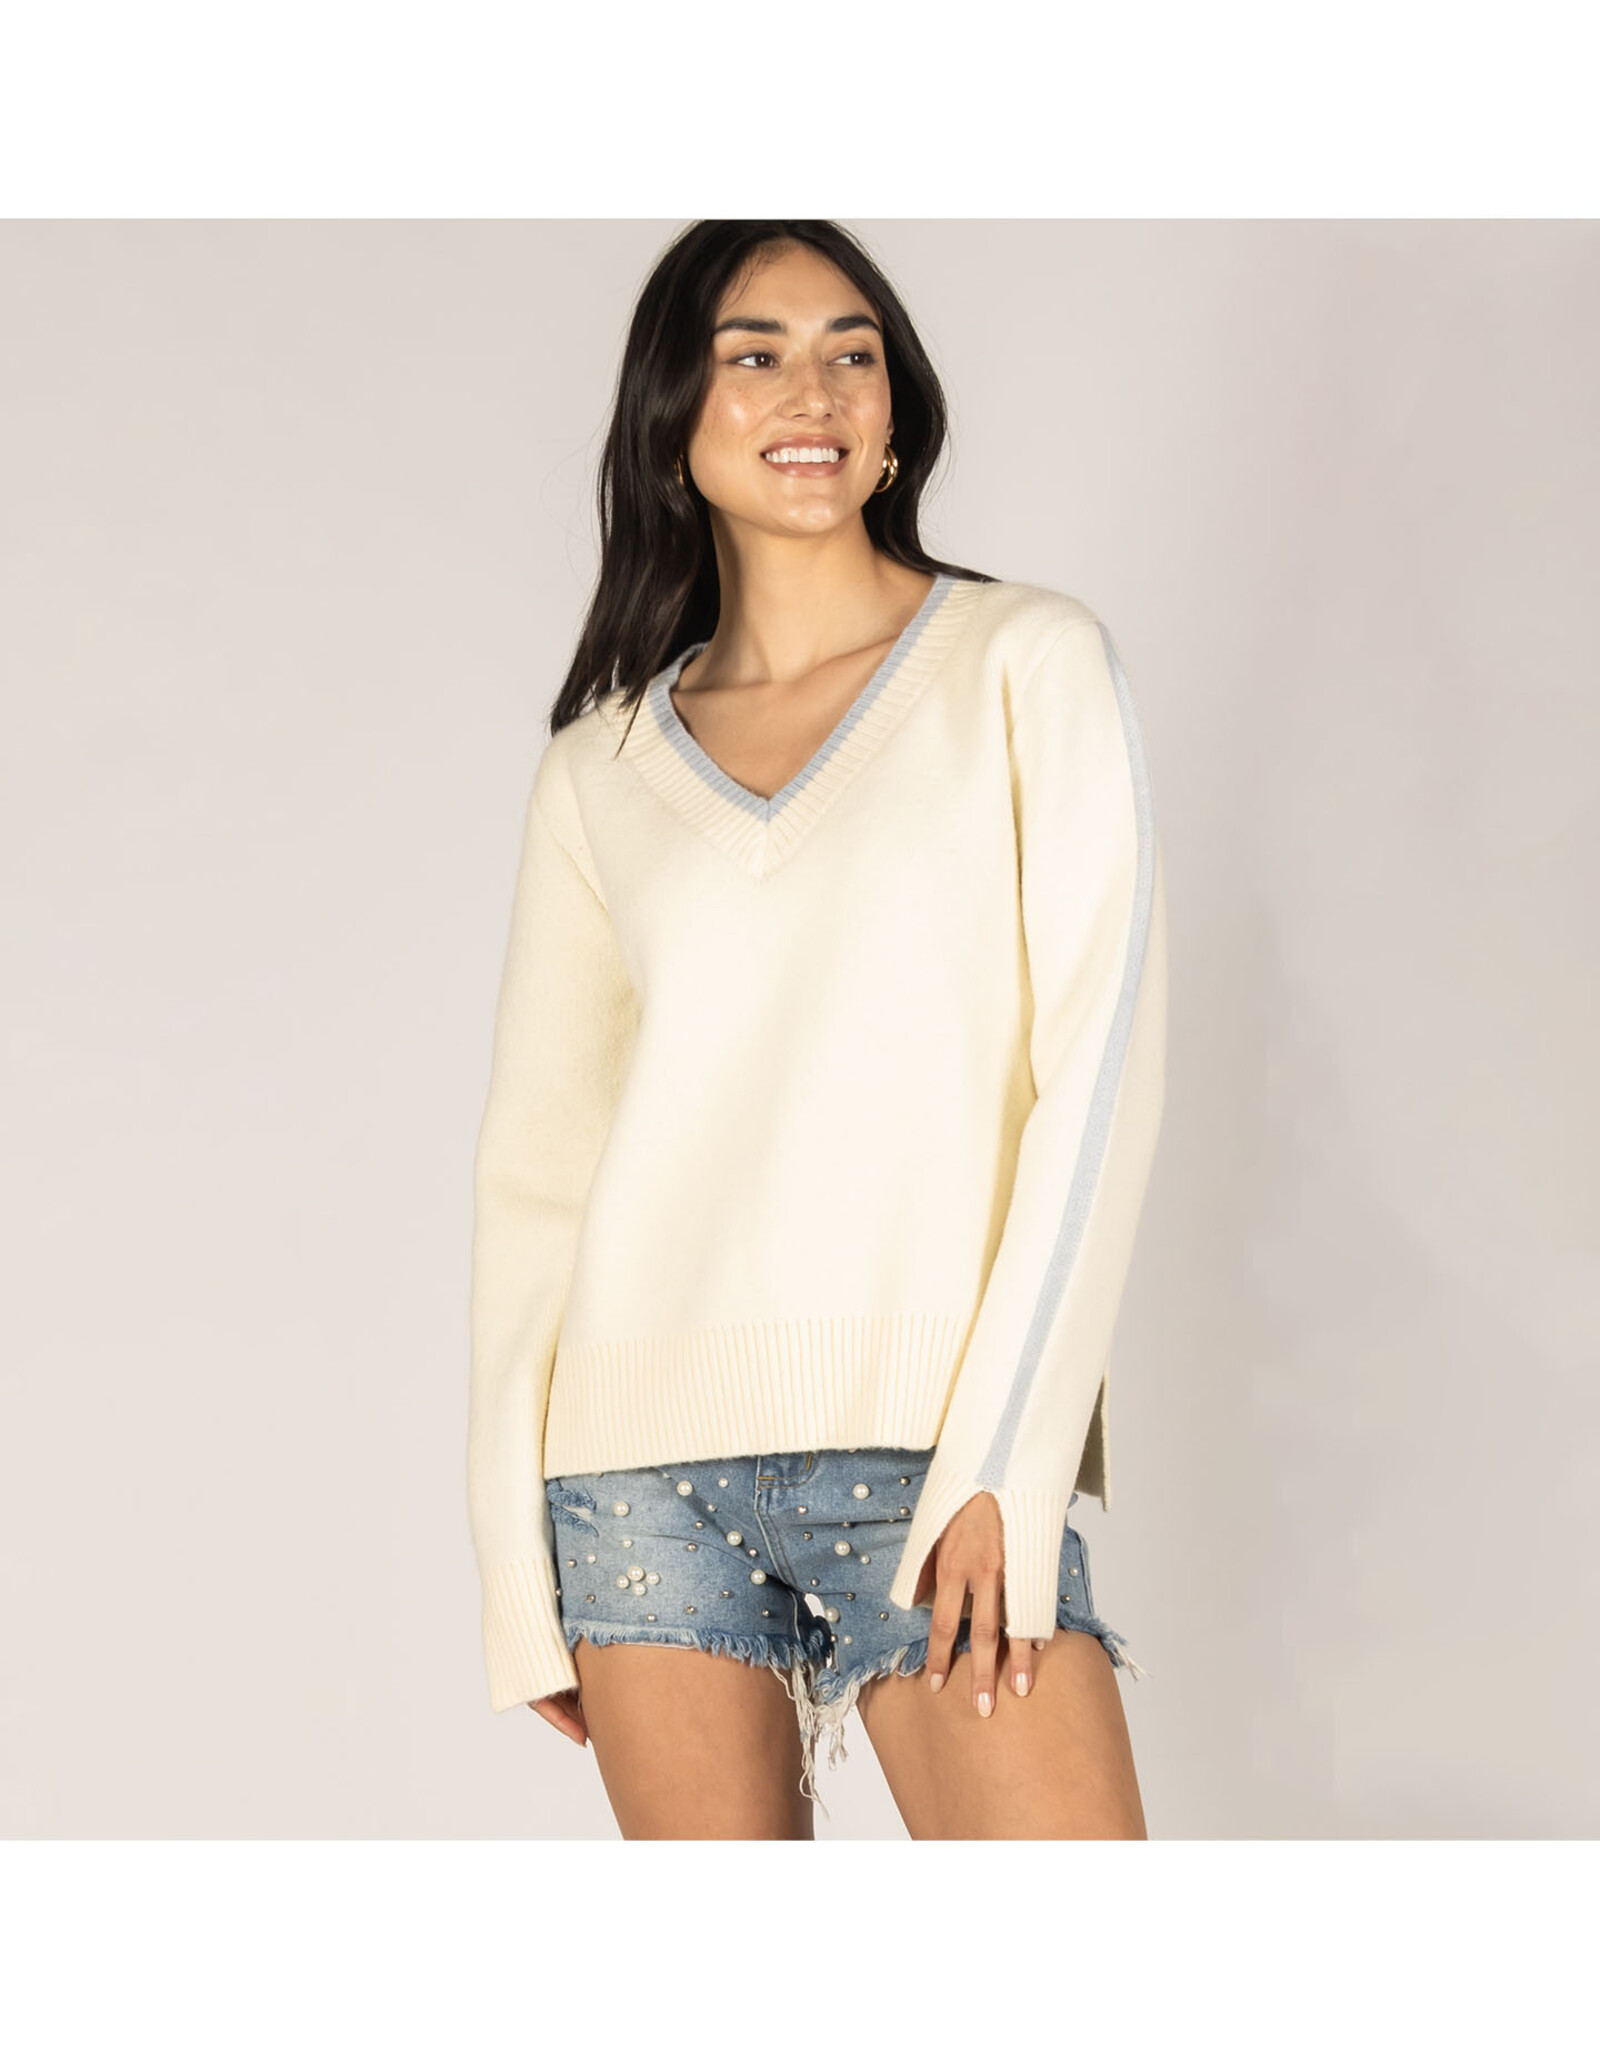 Knit V-Neck Contrast Sweater (Cream/Sky Blue)